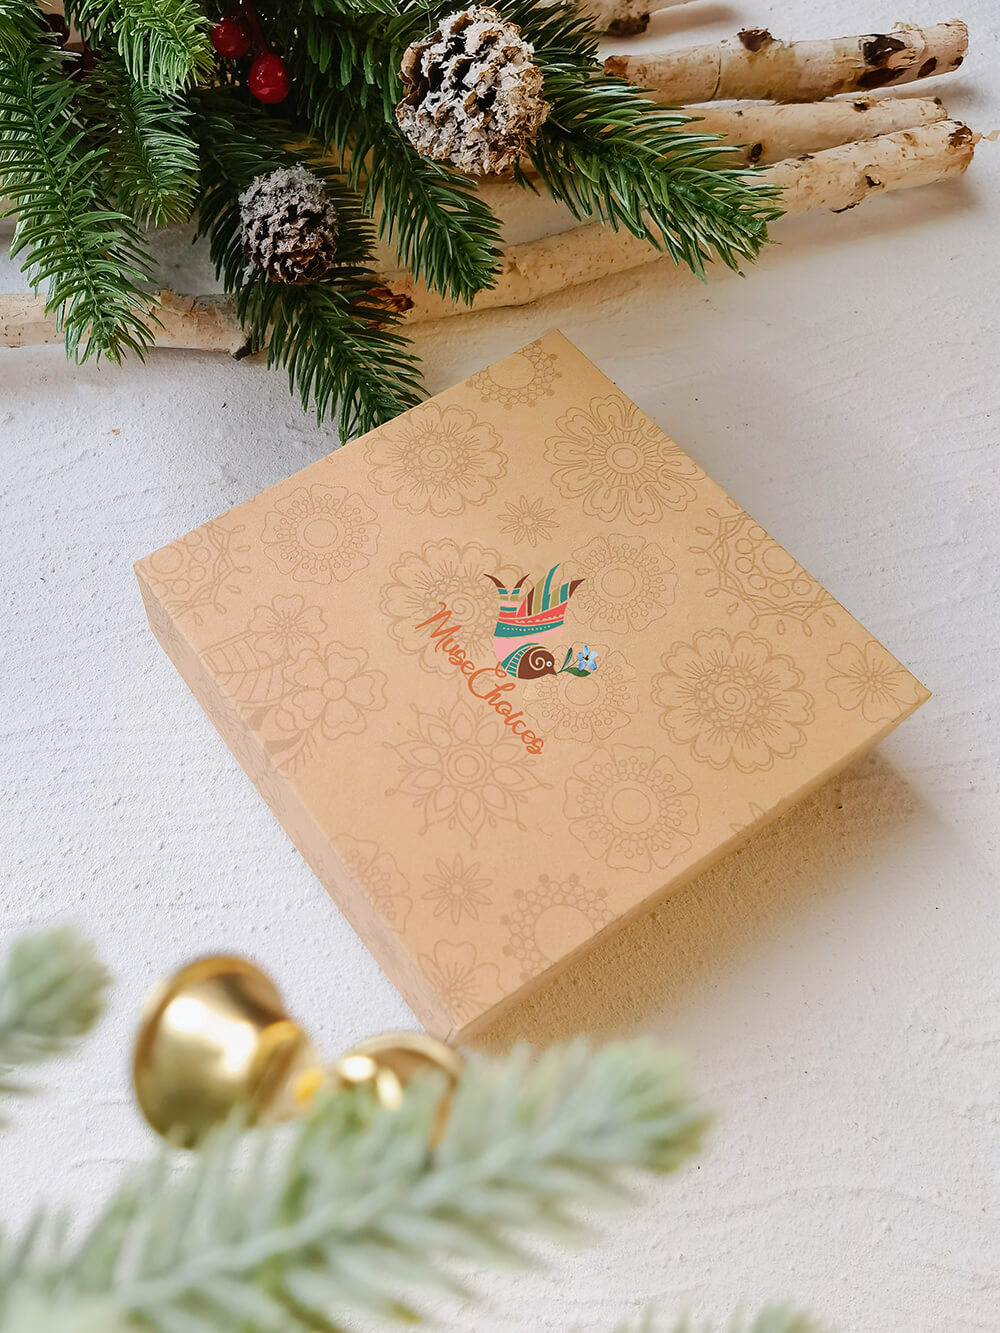 Feiertags-Weihnachtsgeschenke-Baum-Ohrring